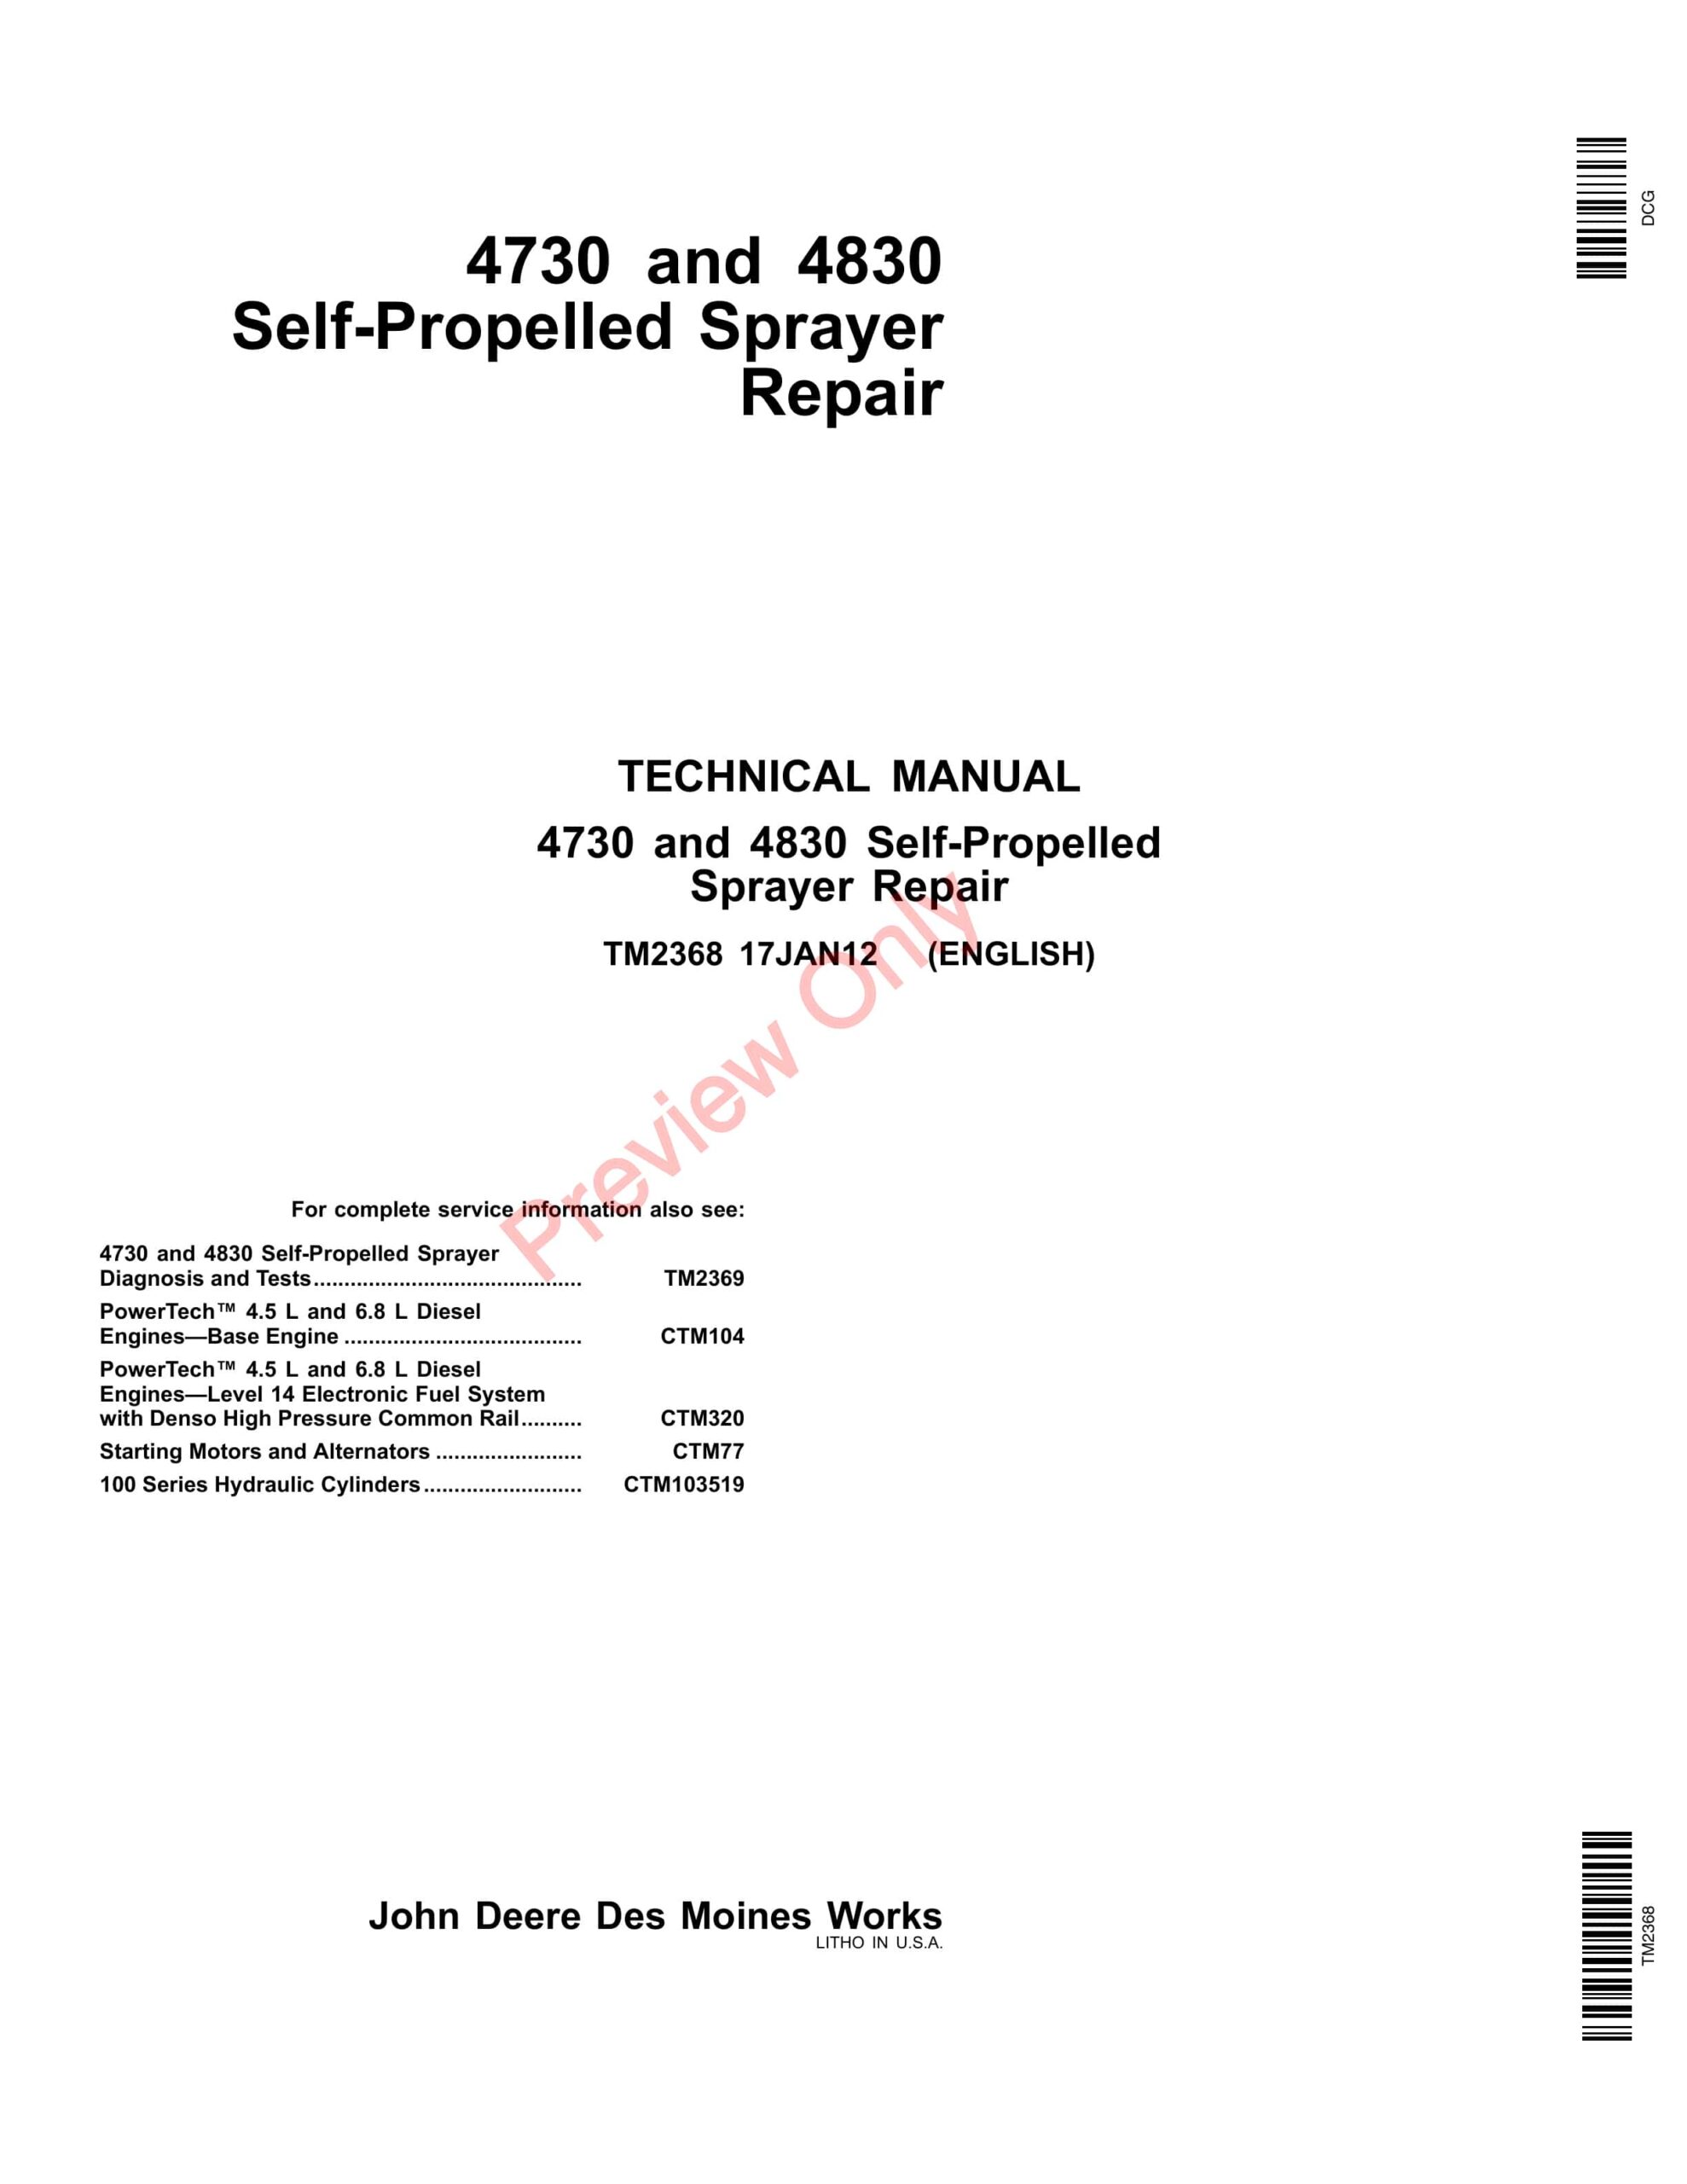 John Deere 4730 and 4830 Self-Propelled Sprayer Technical Manual TM2368 17JAN12-1